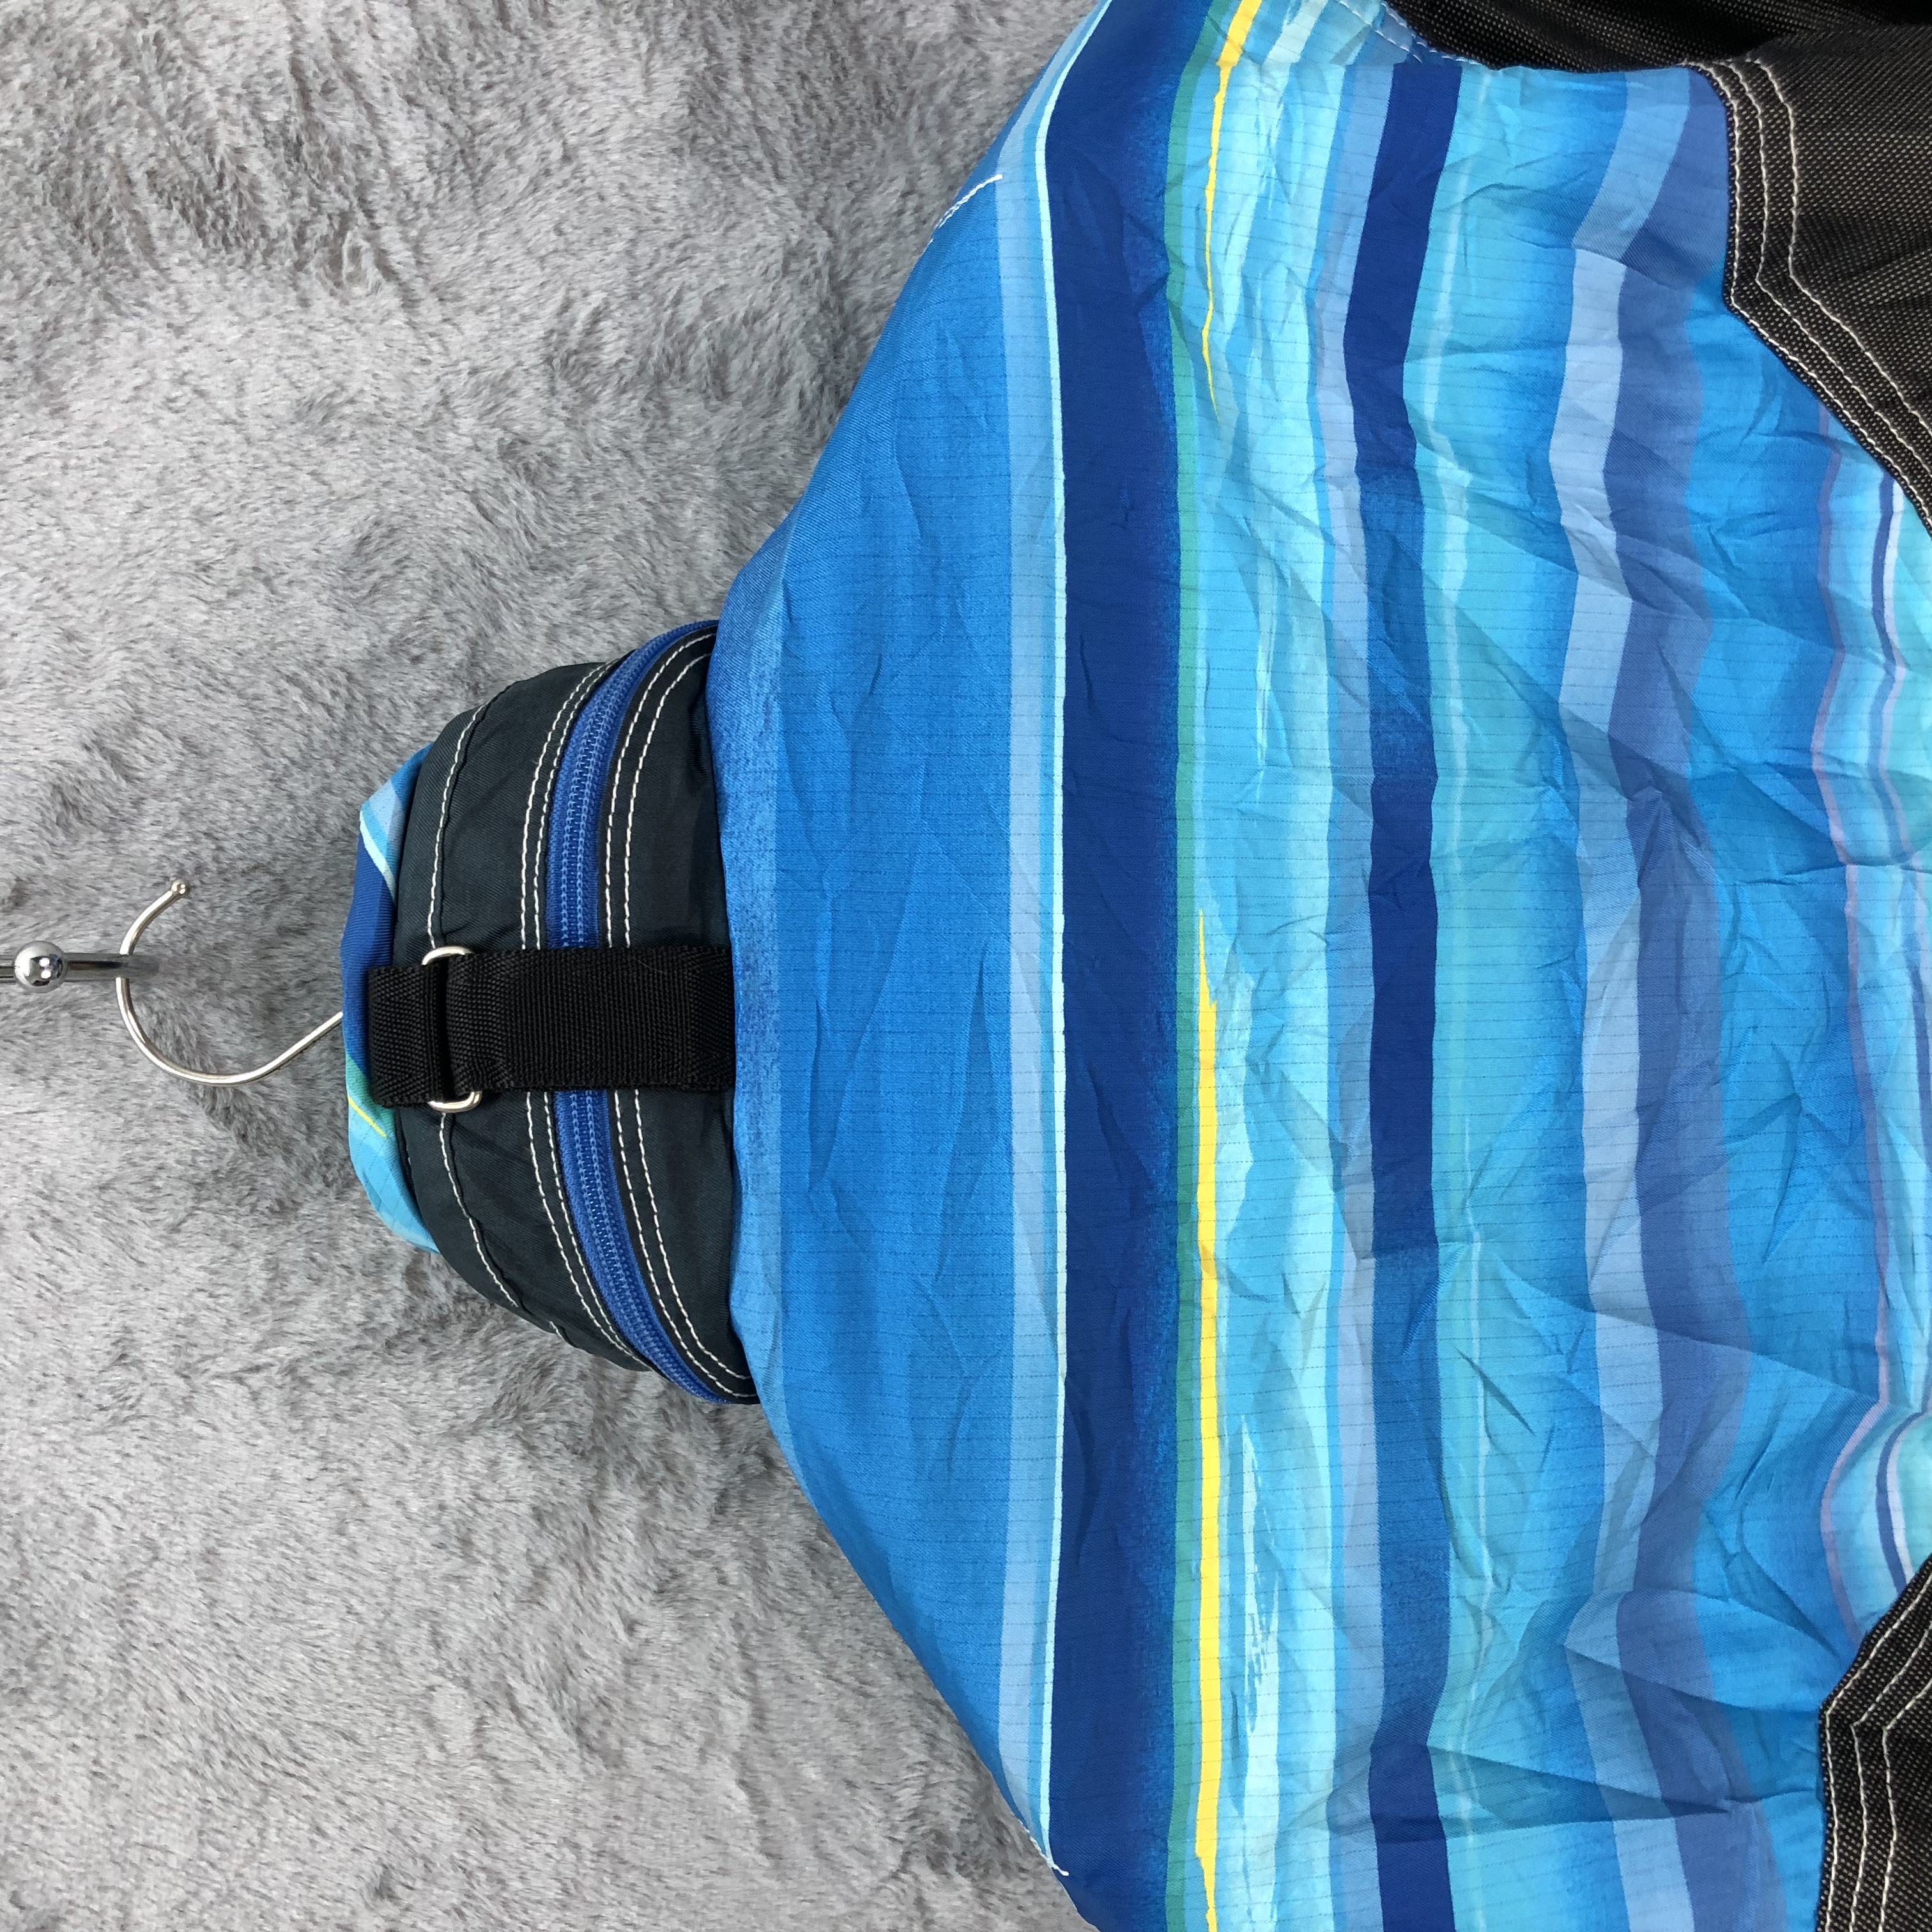 Salomon Optimal Movement Aqua Blue Ski Jacket #4748-167 - 13